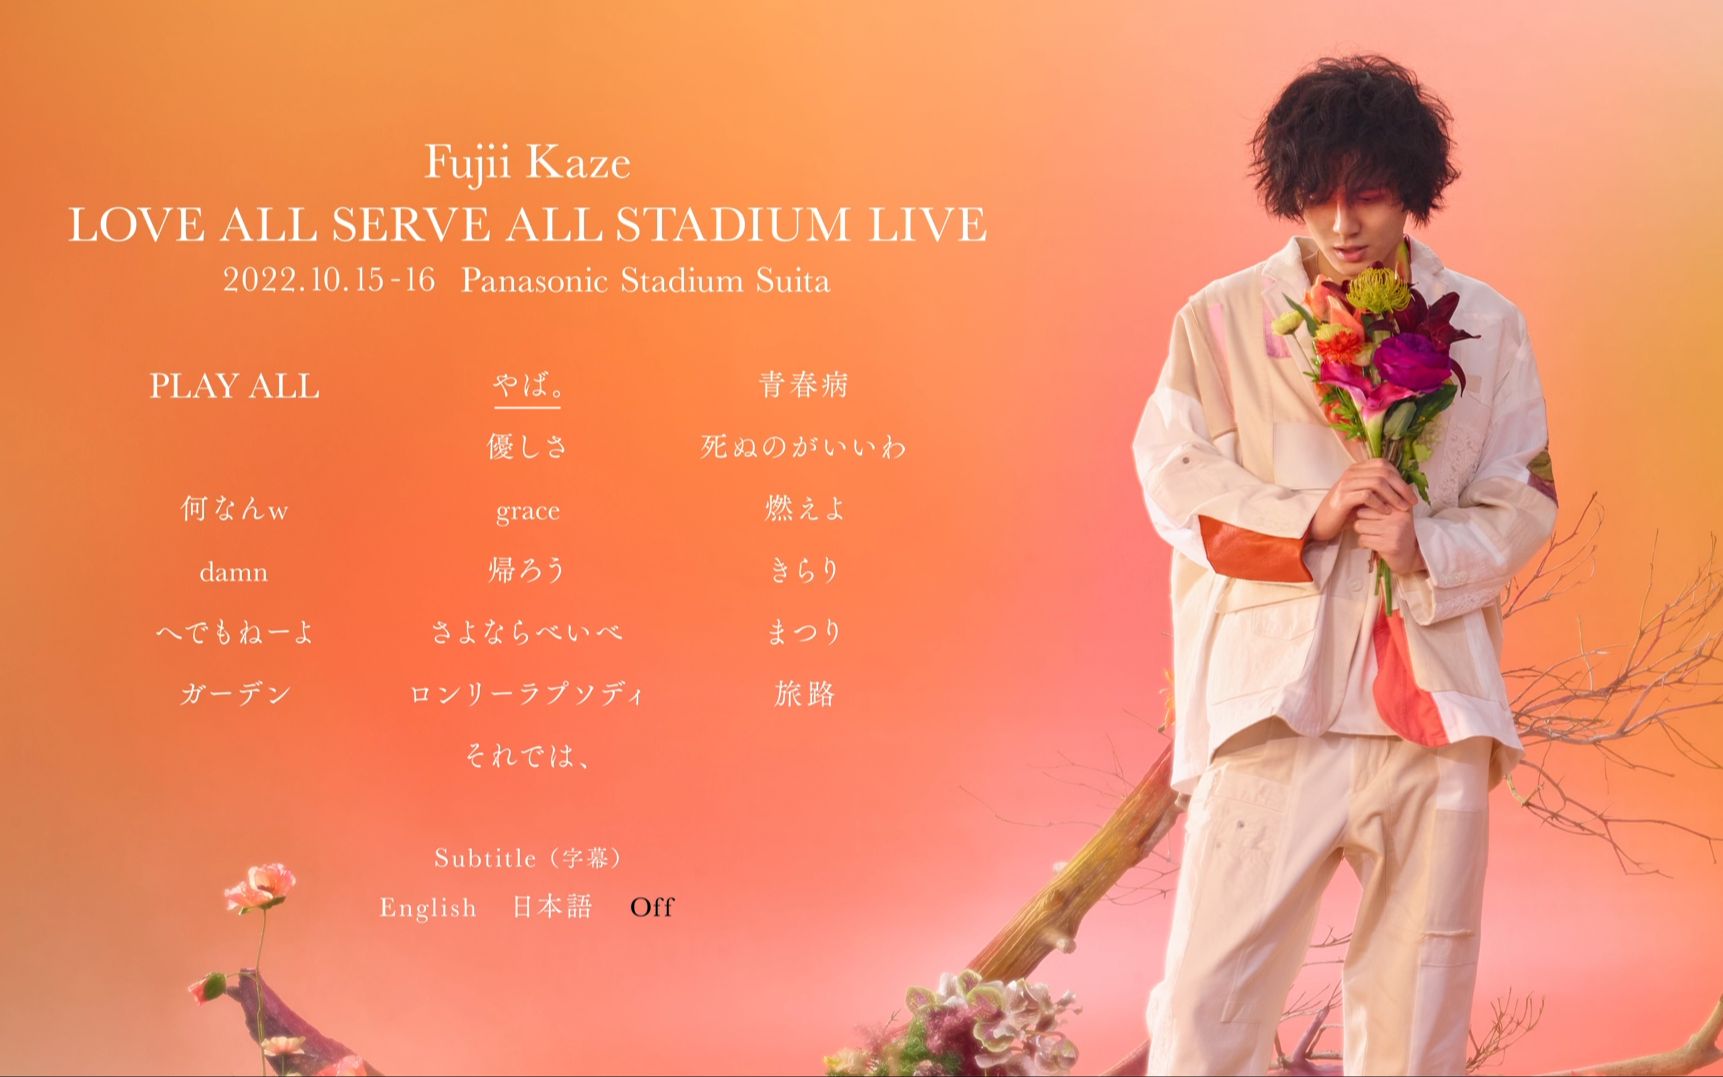 [分P] 藤井风 - LOVE ALL SERVE ALL STADIUM LIVE + grace 2022 Documentary (FULL ver.)